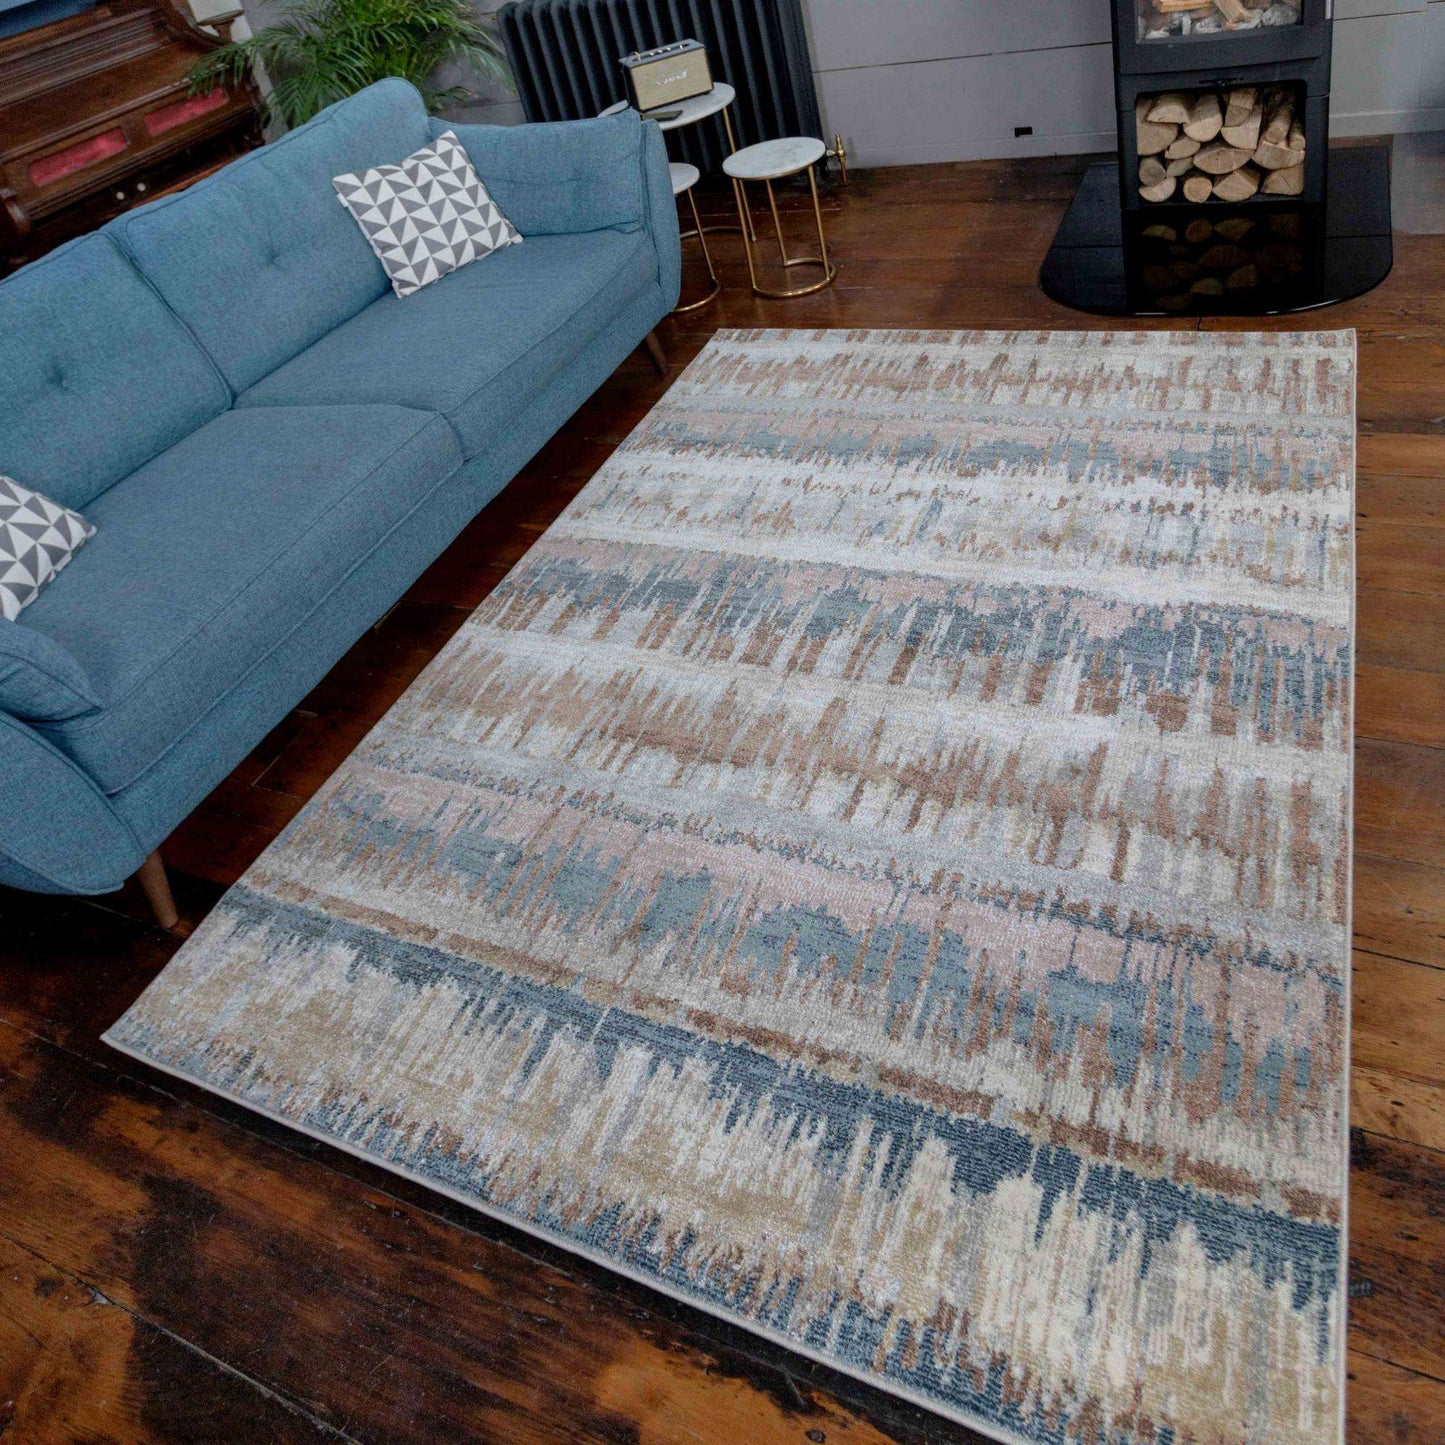 Soft Modern Blue Natural Tone Living Room Rugs